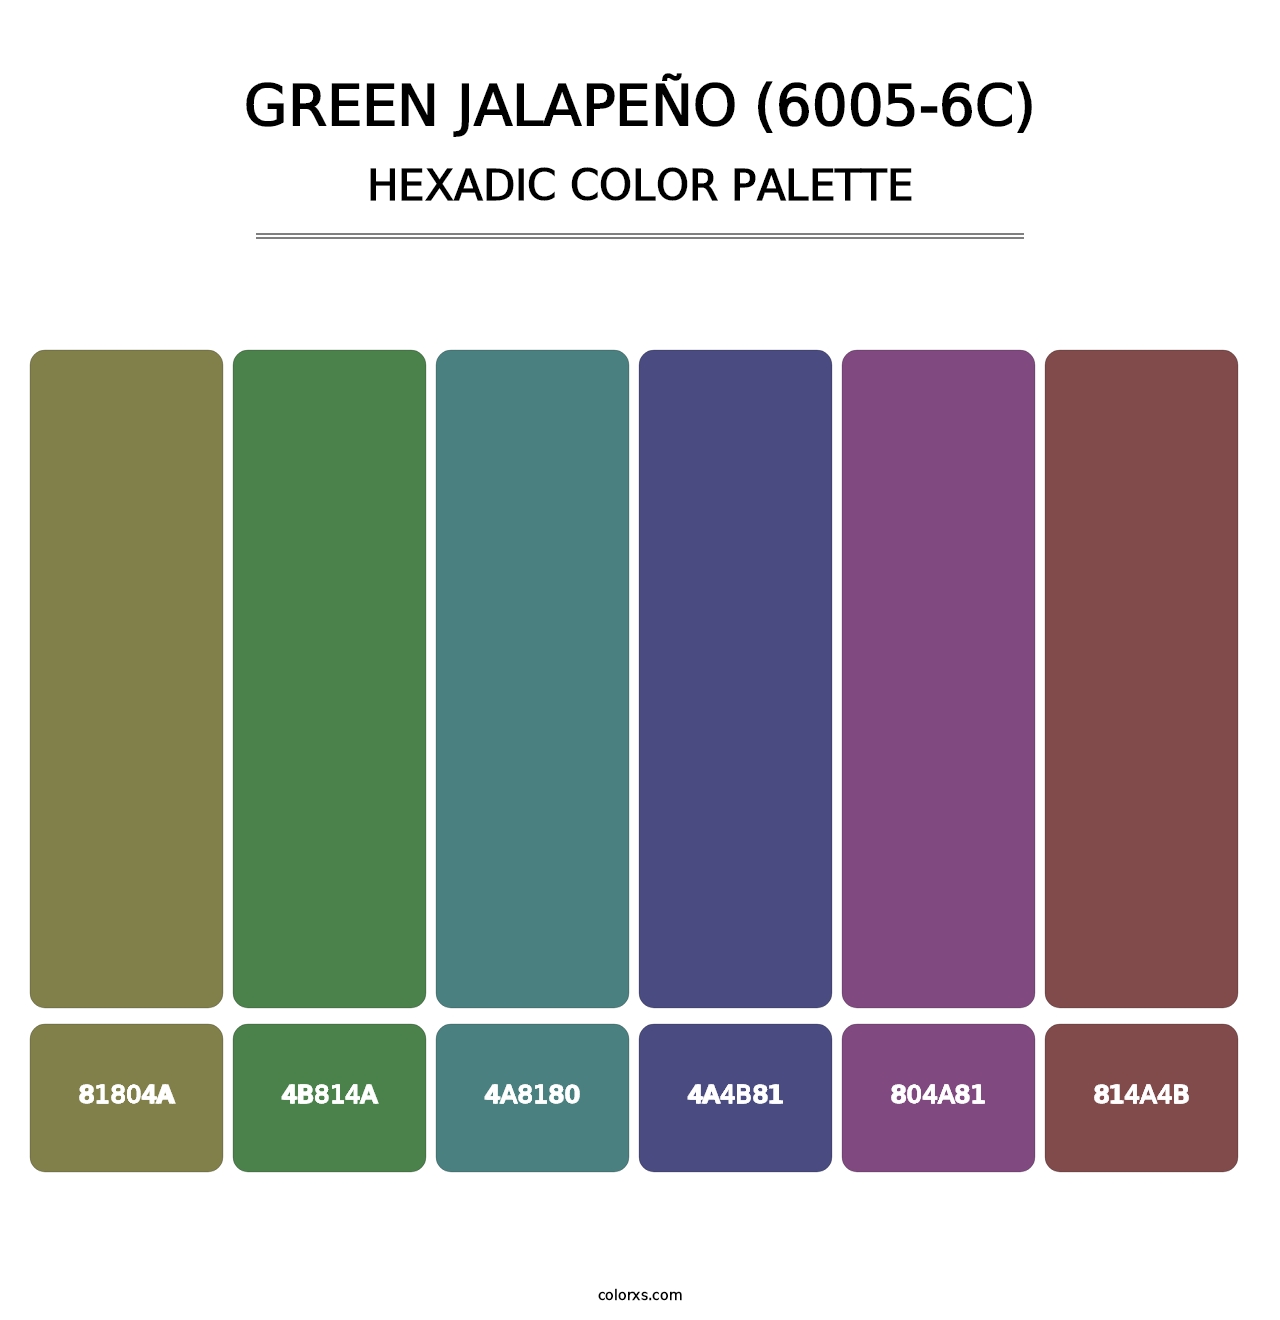 Green Jalapeño (6005-6C) - Hexadic Color Palette